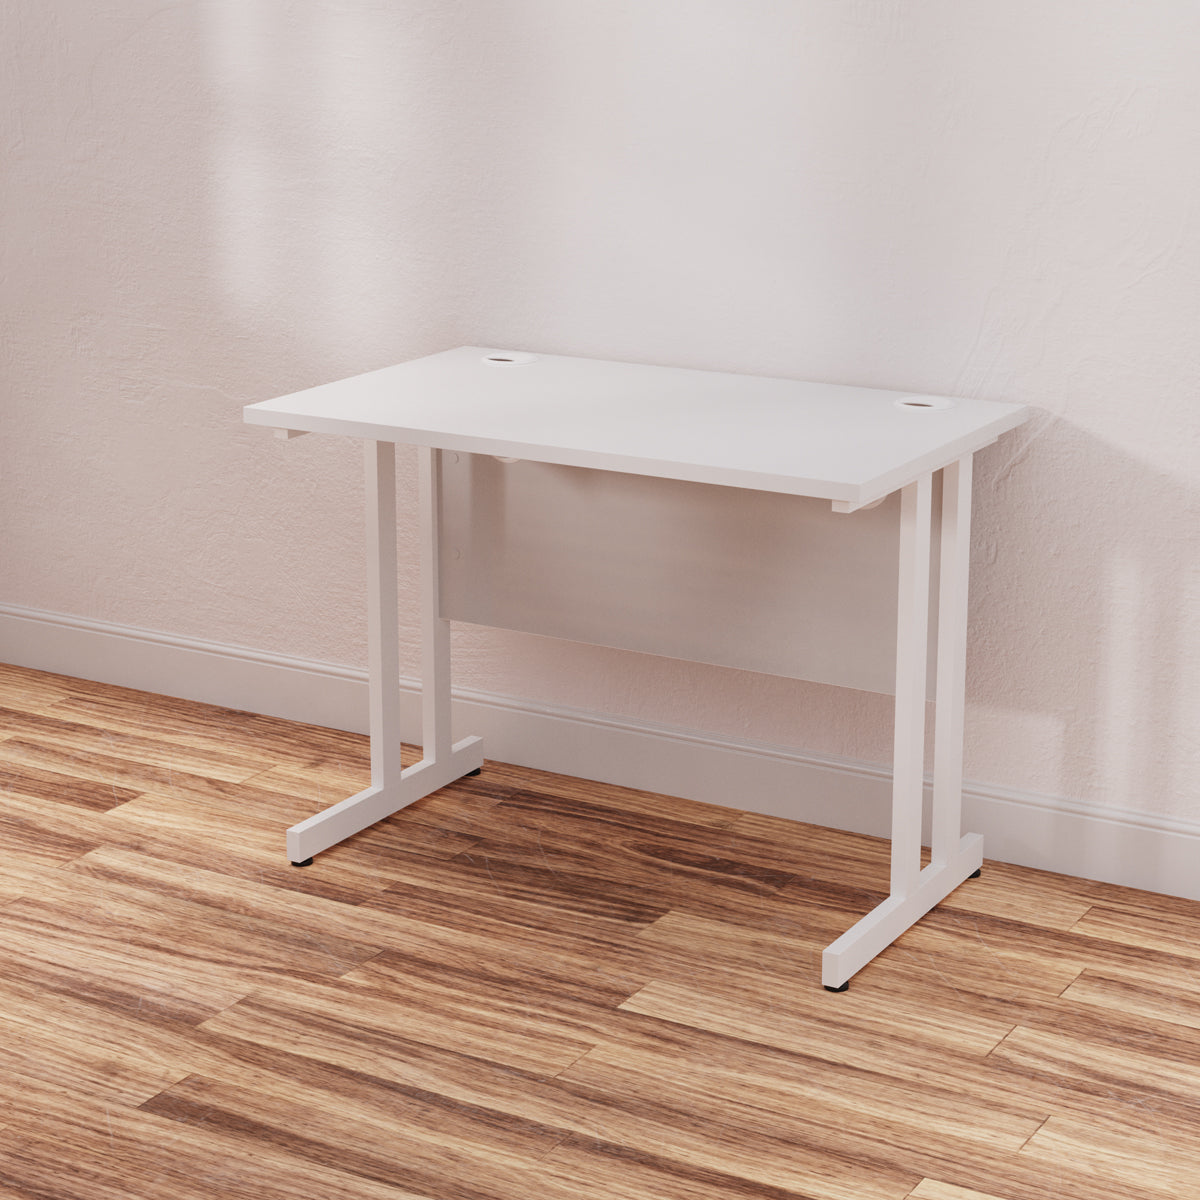 Impulse 1000mm Slimline Desk Cantilever Leg - MFC Rectangular Table, Self-Assembly, 5-Year Guarantee, 1000x600 Top, Silver/White/Black Frame